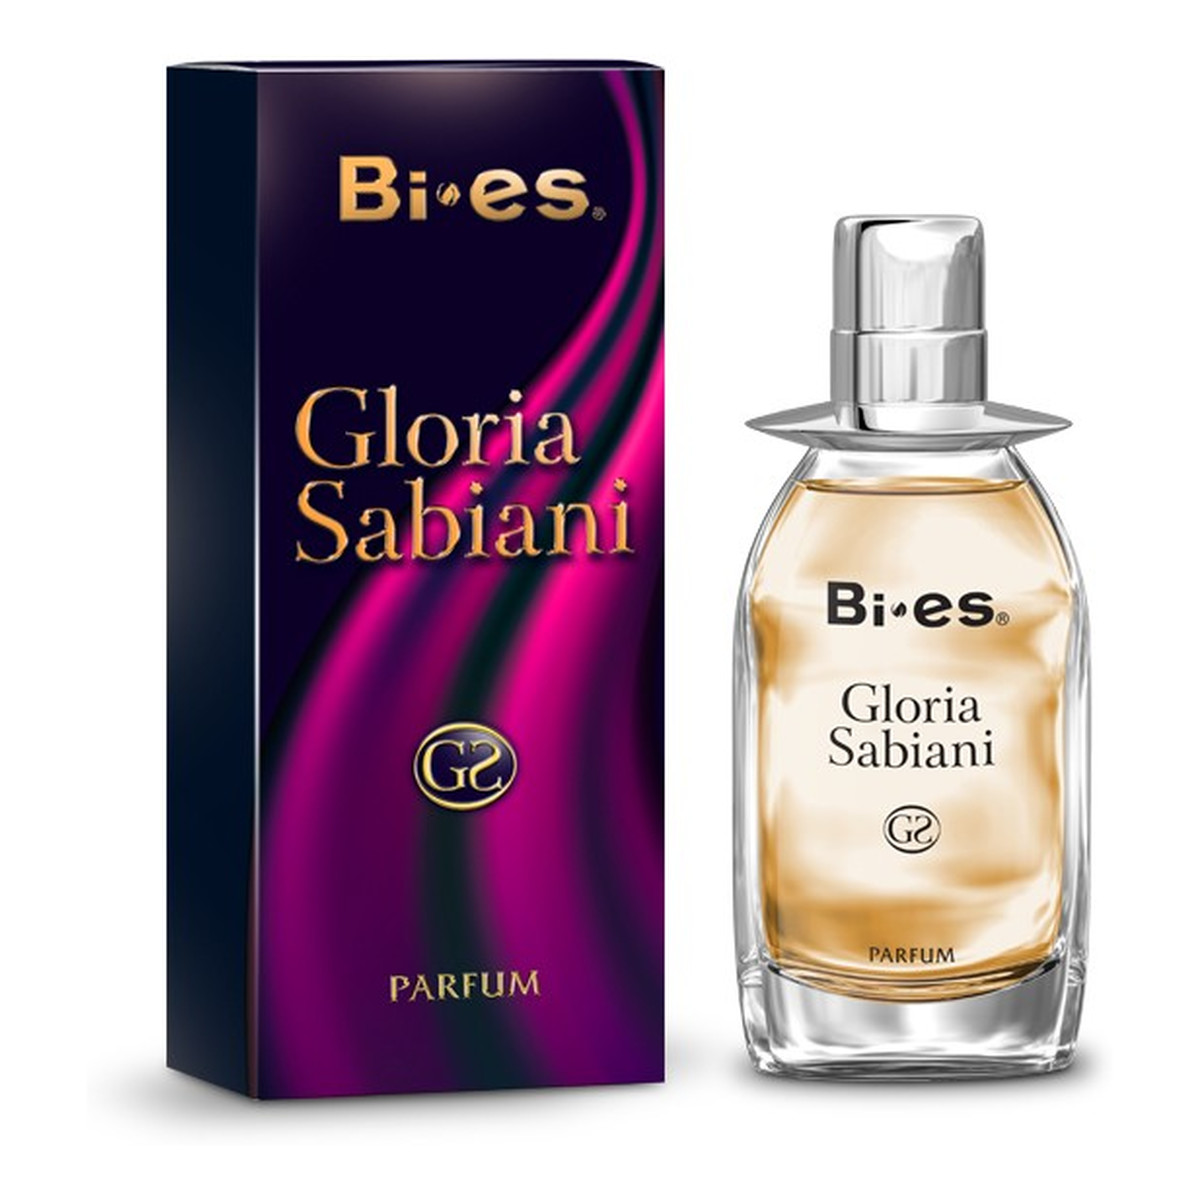 Bi-es gloria sabiani perfumka 15ml